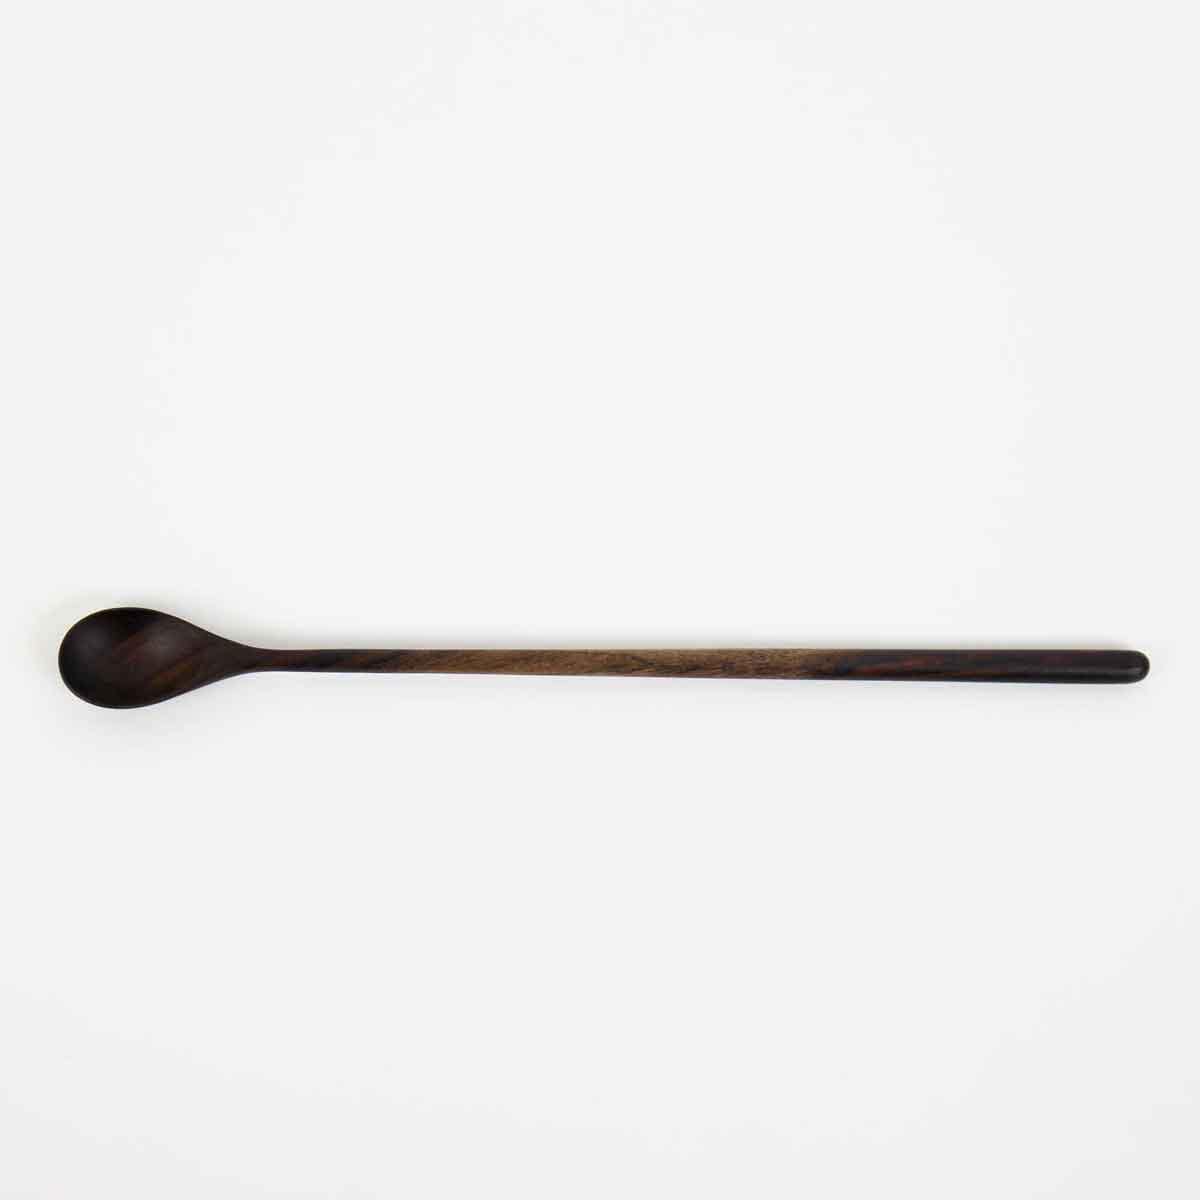 TEAK BURNED Long spoon